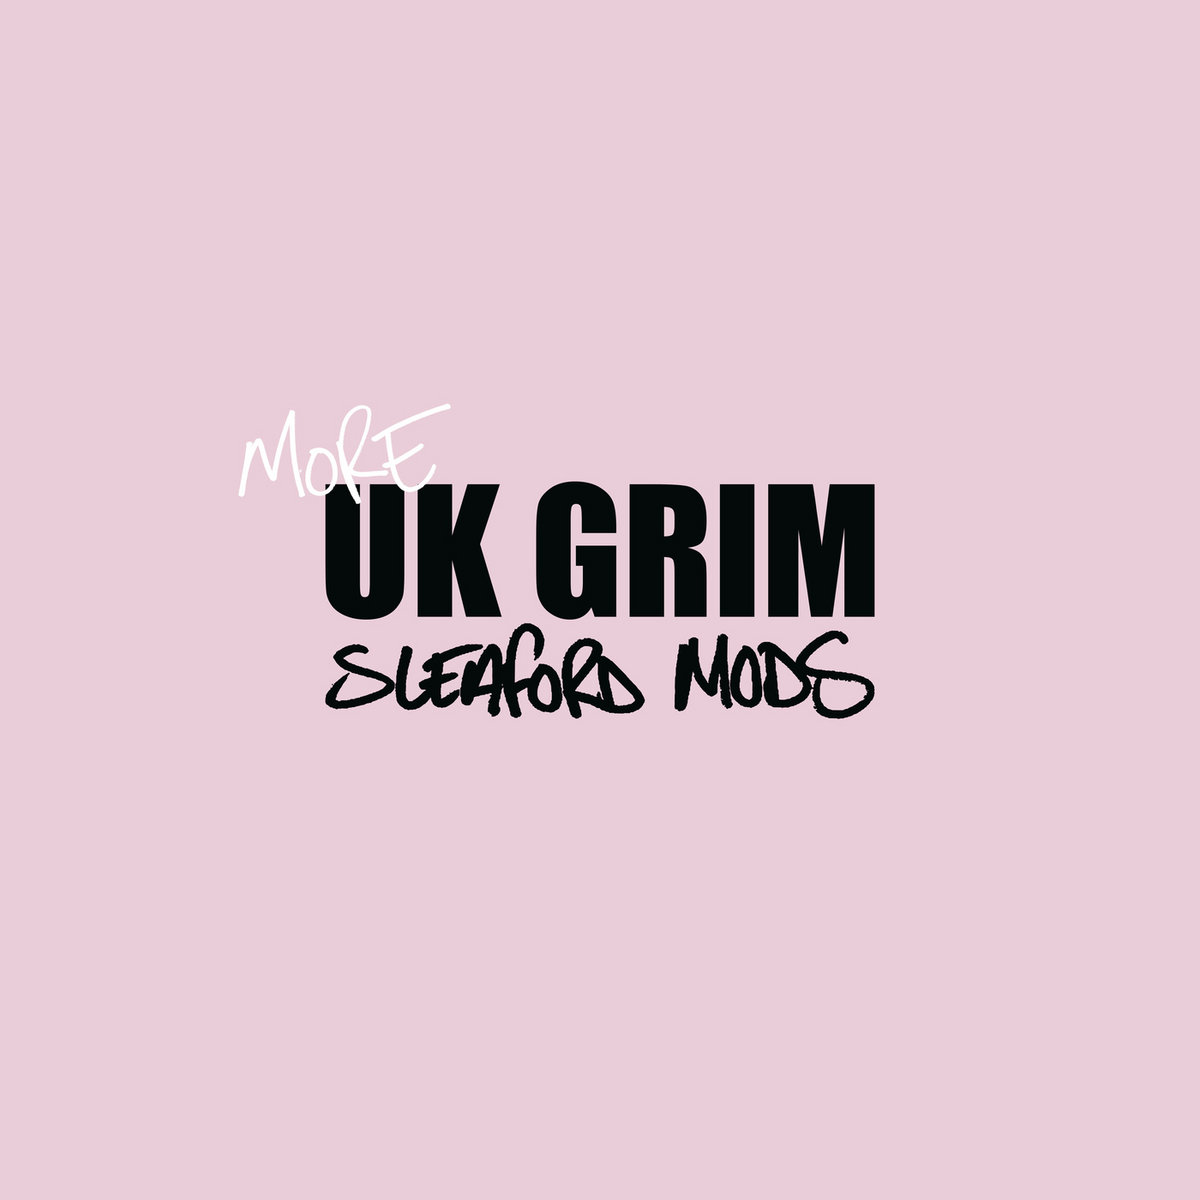 News – Sleaford Mods – More UK GRIM